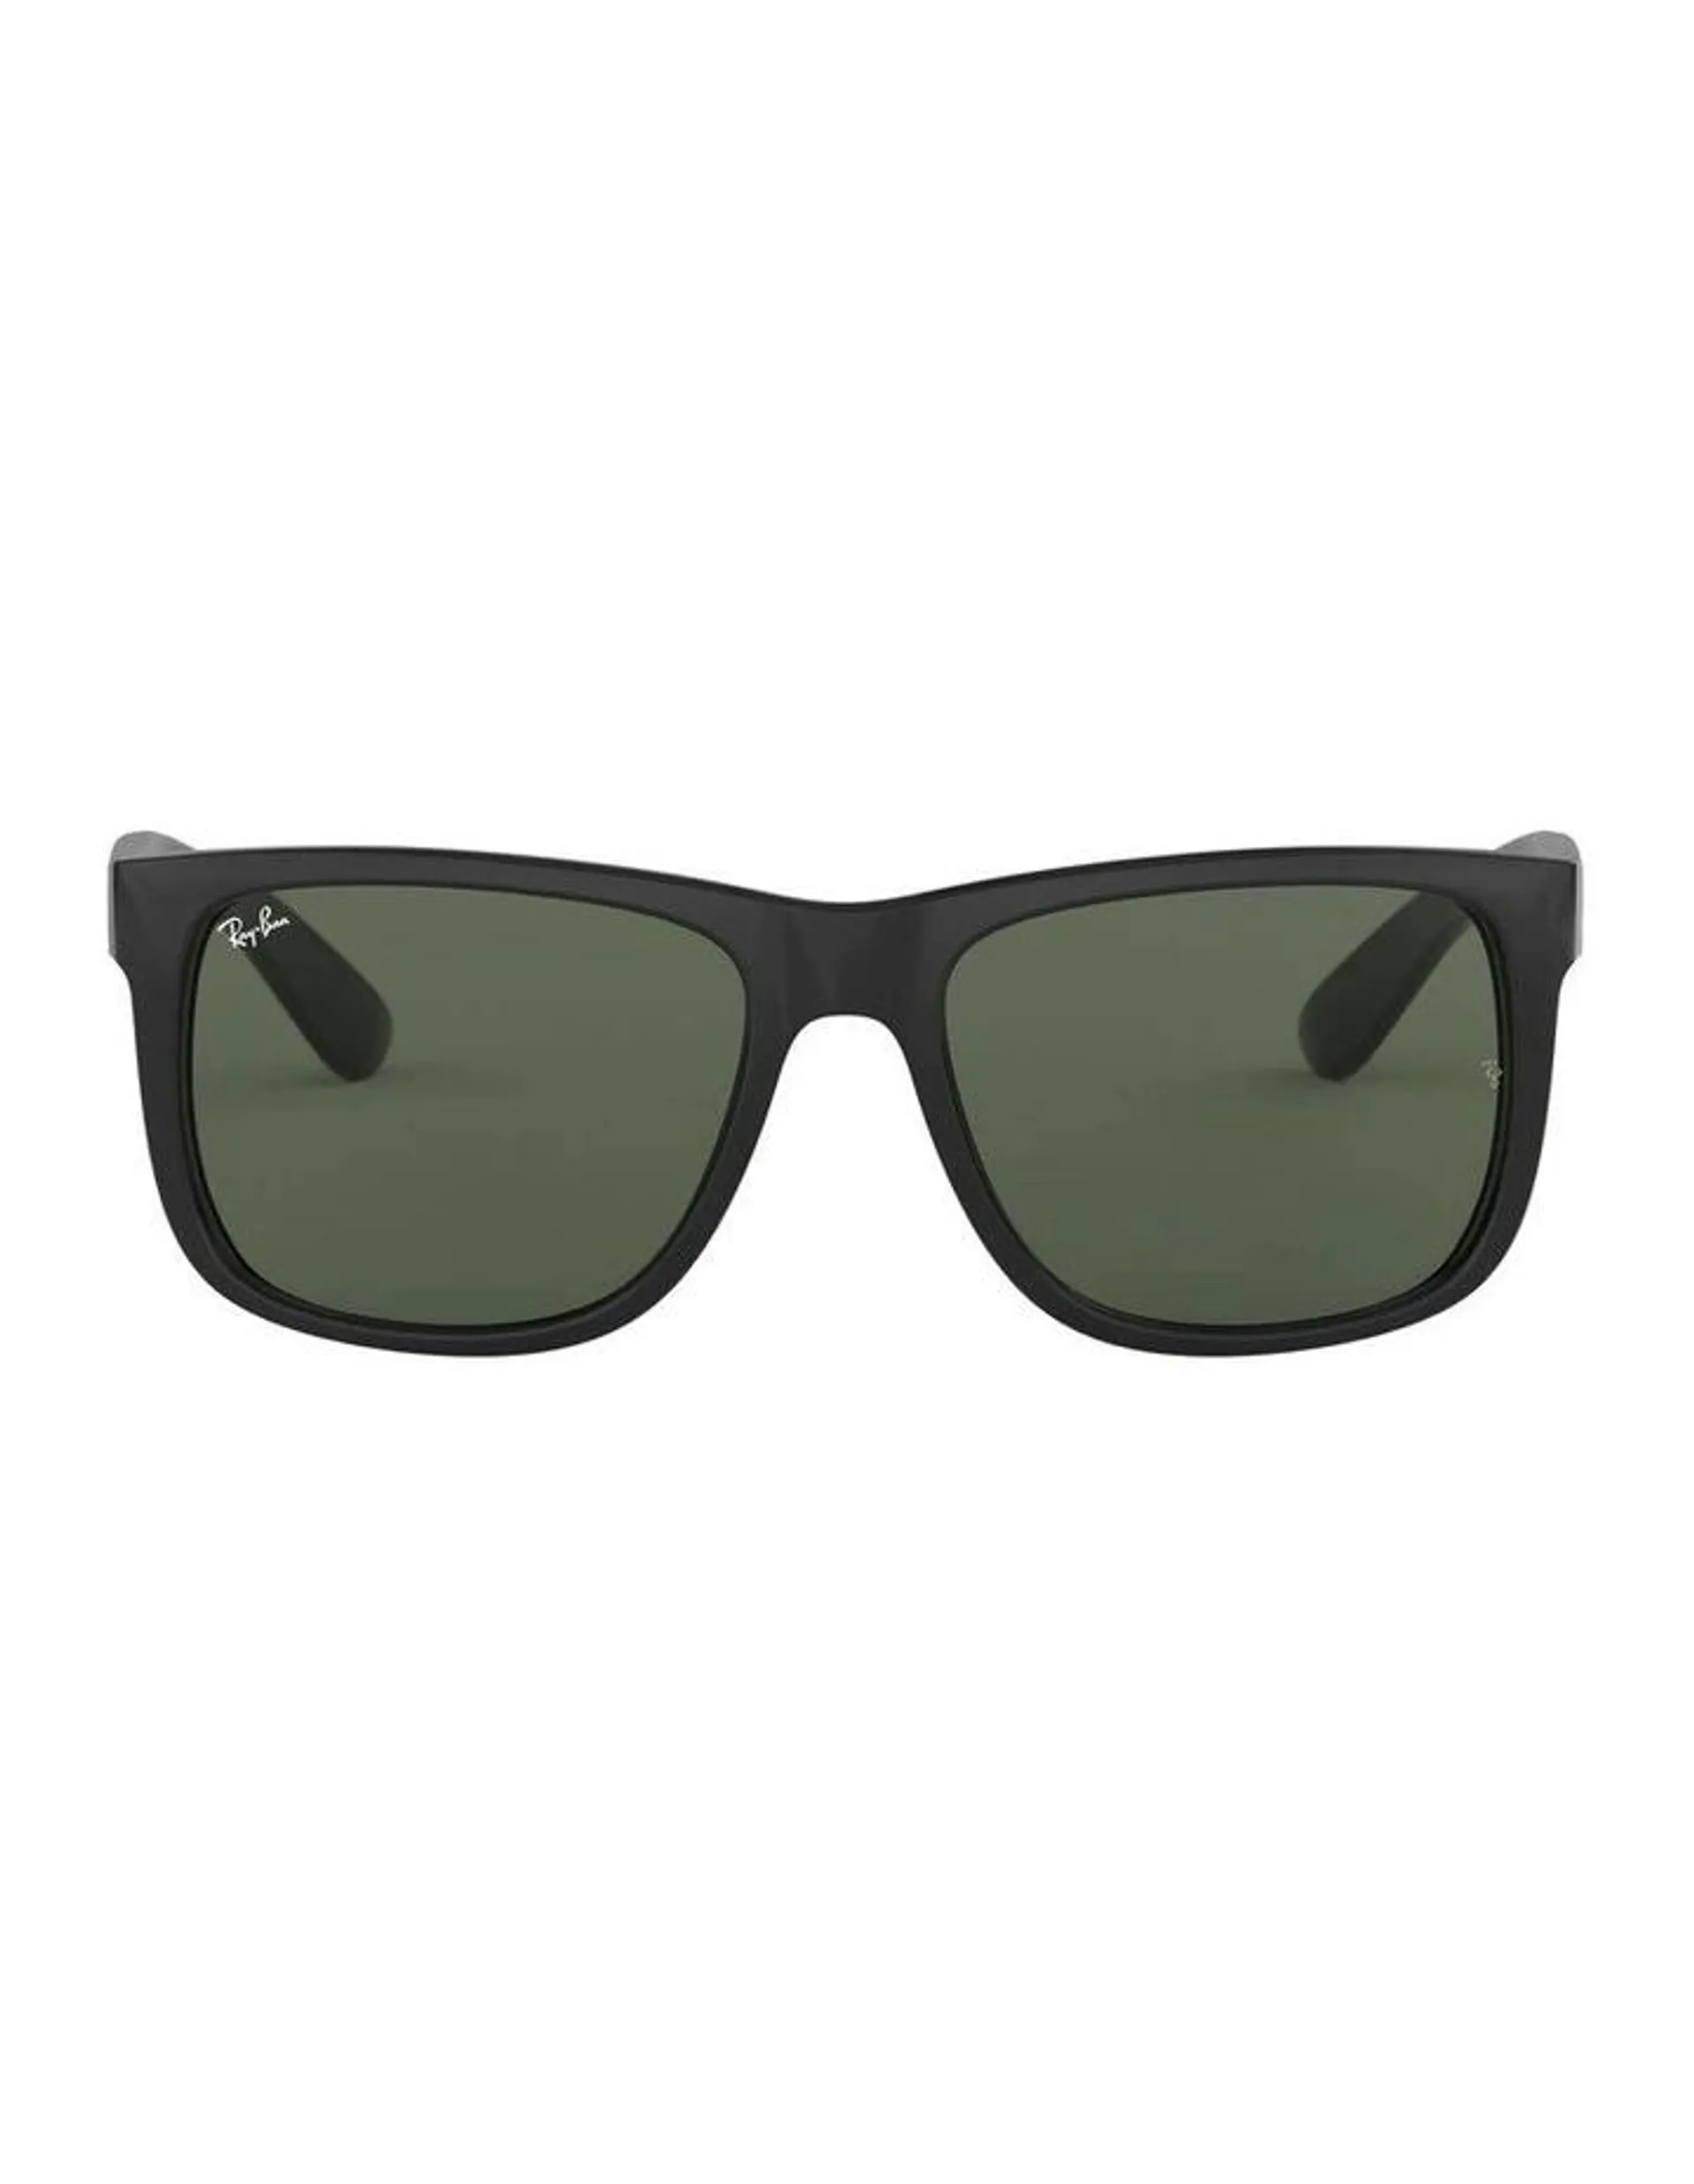 Justin Black RB4165 Sunglasses